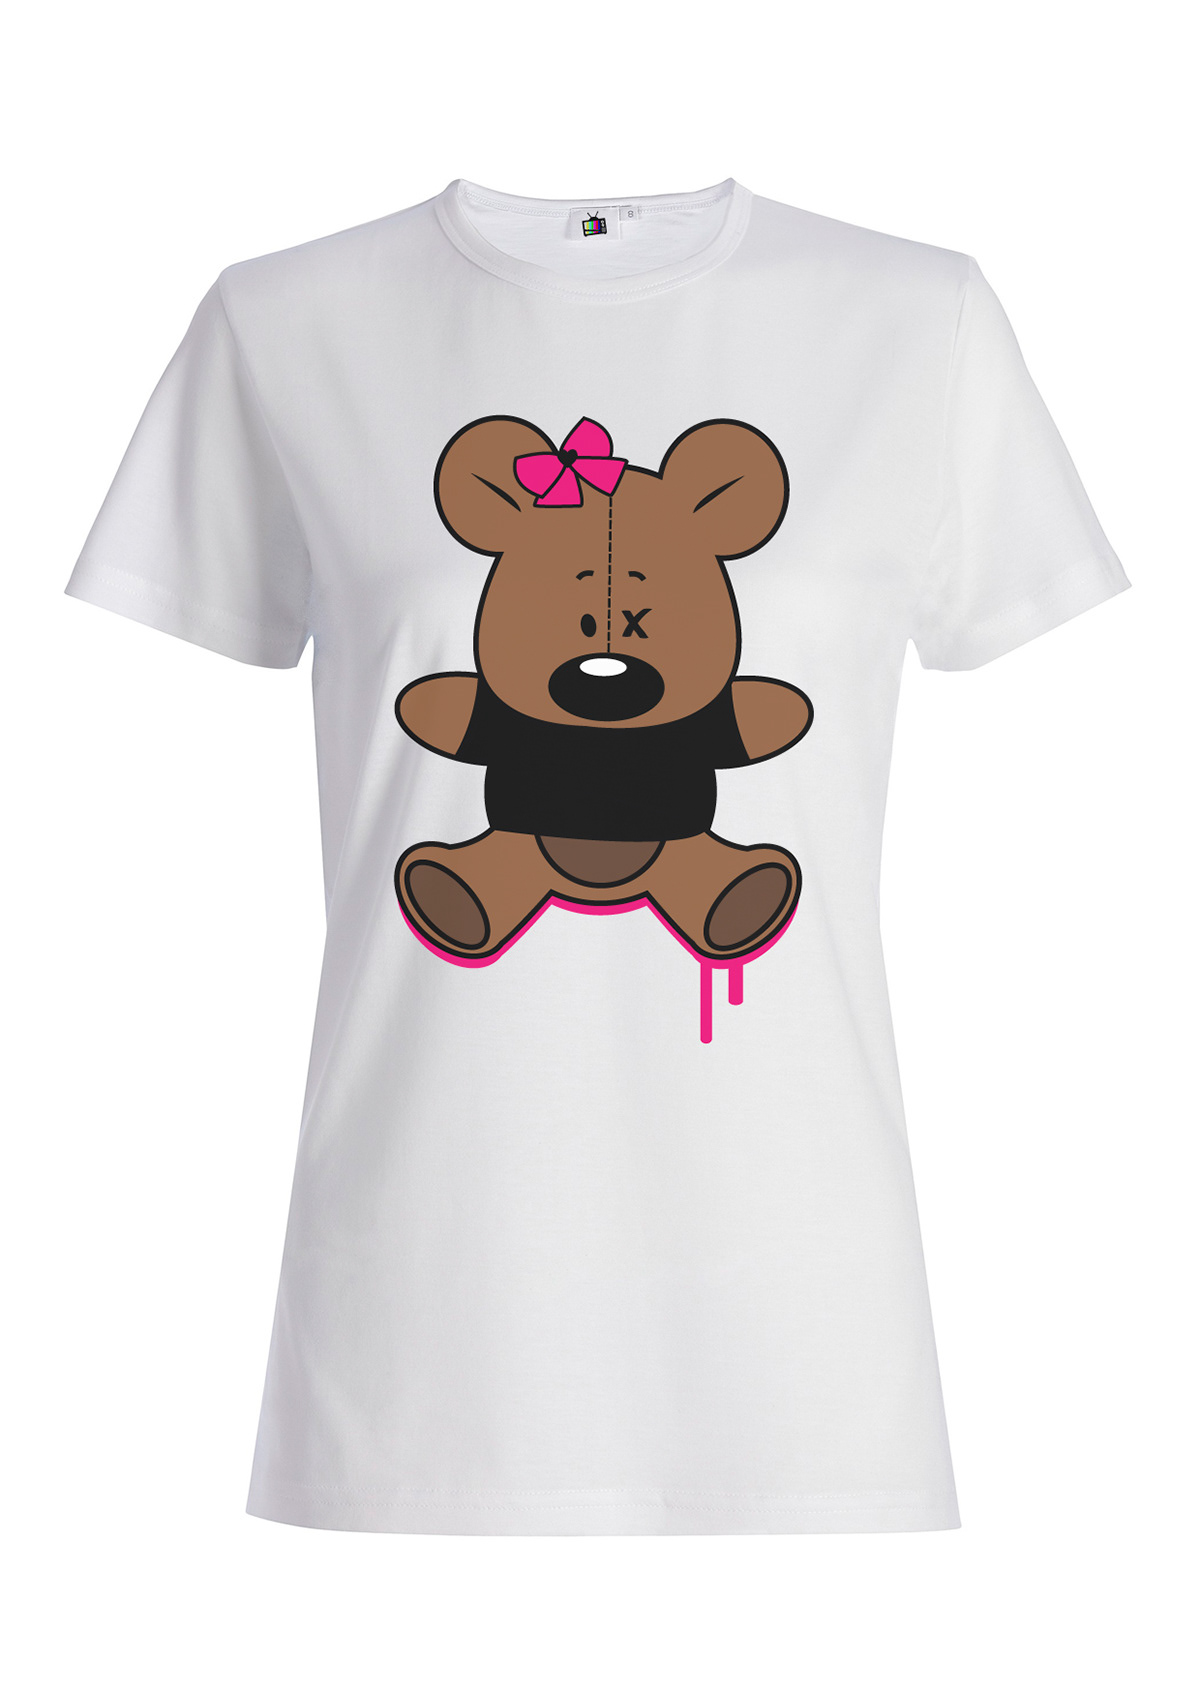 Urban bear Teddy Character Clothing wear t-shirt